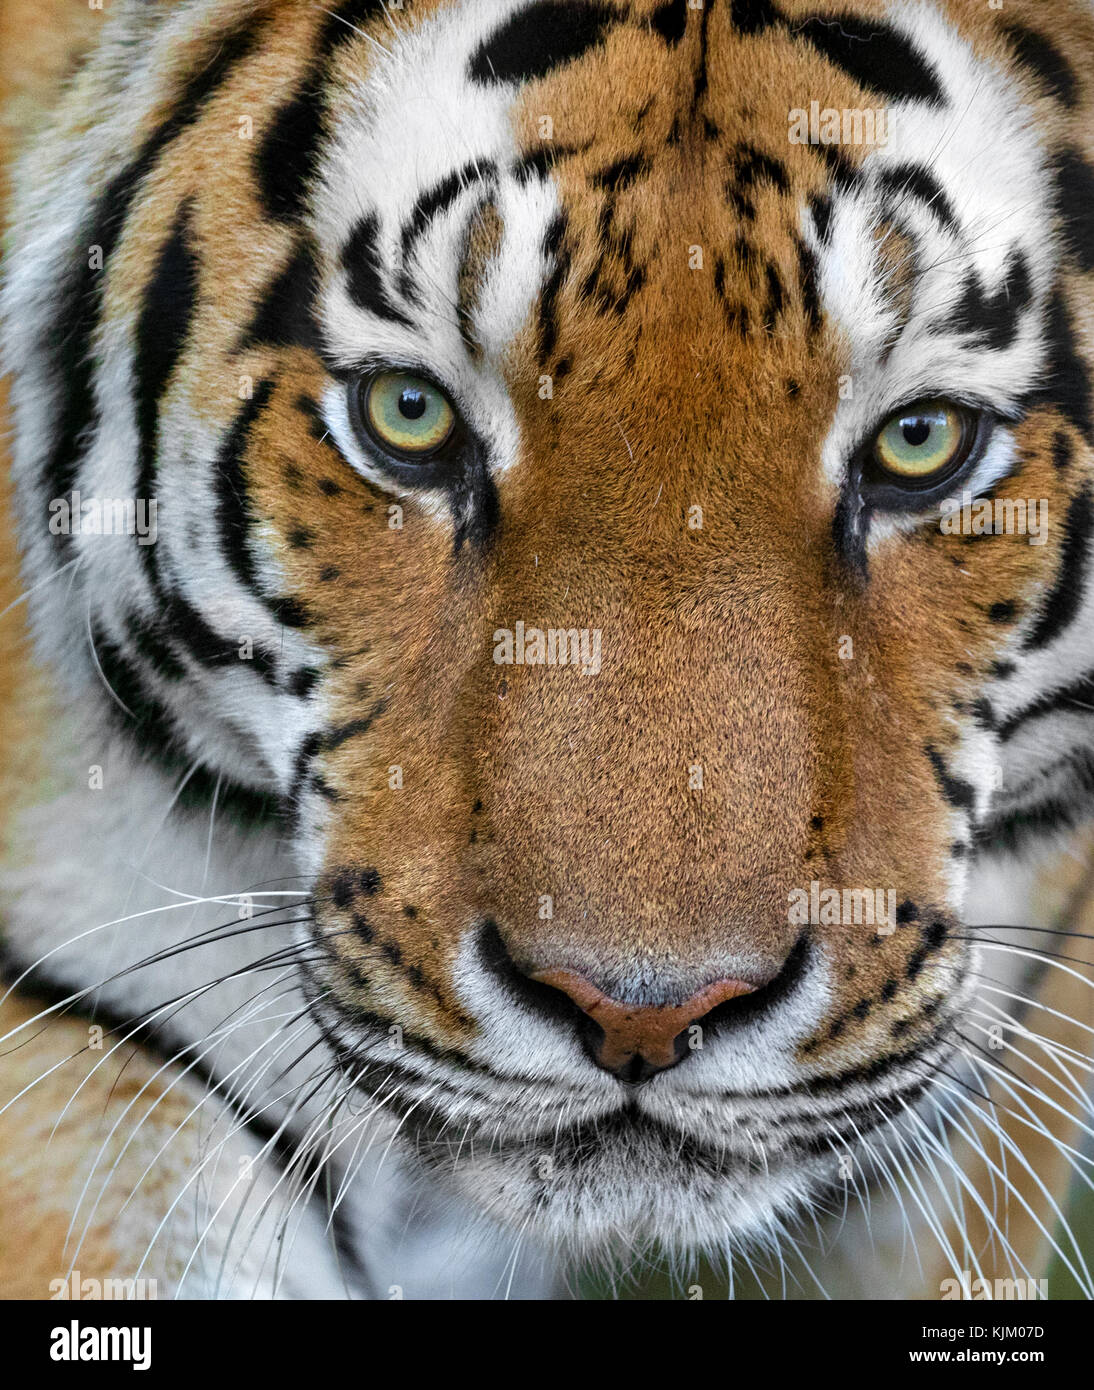 Retrato de un tigre de Amur Foto de stock